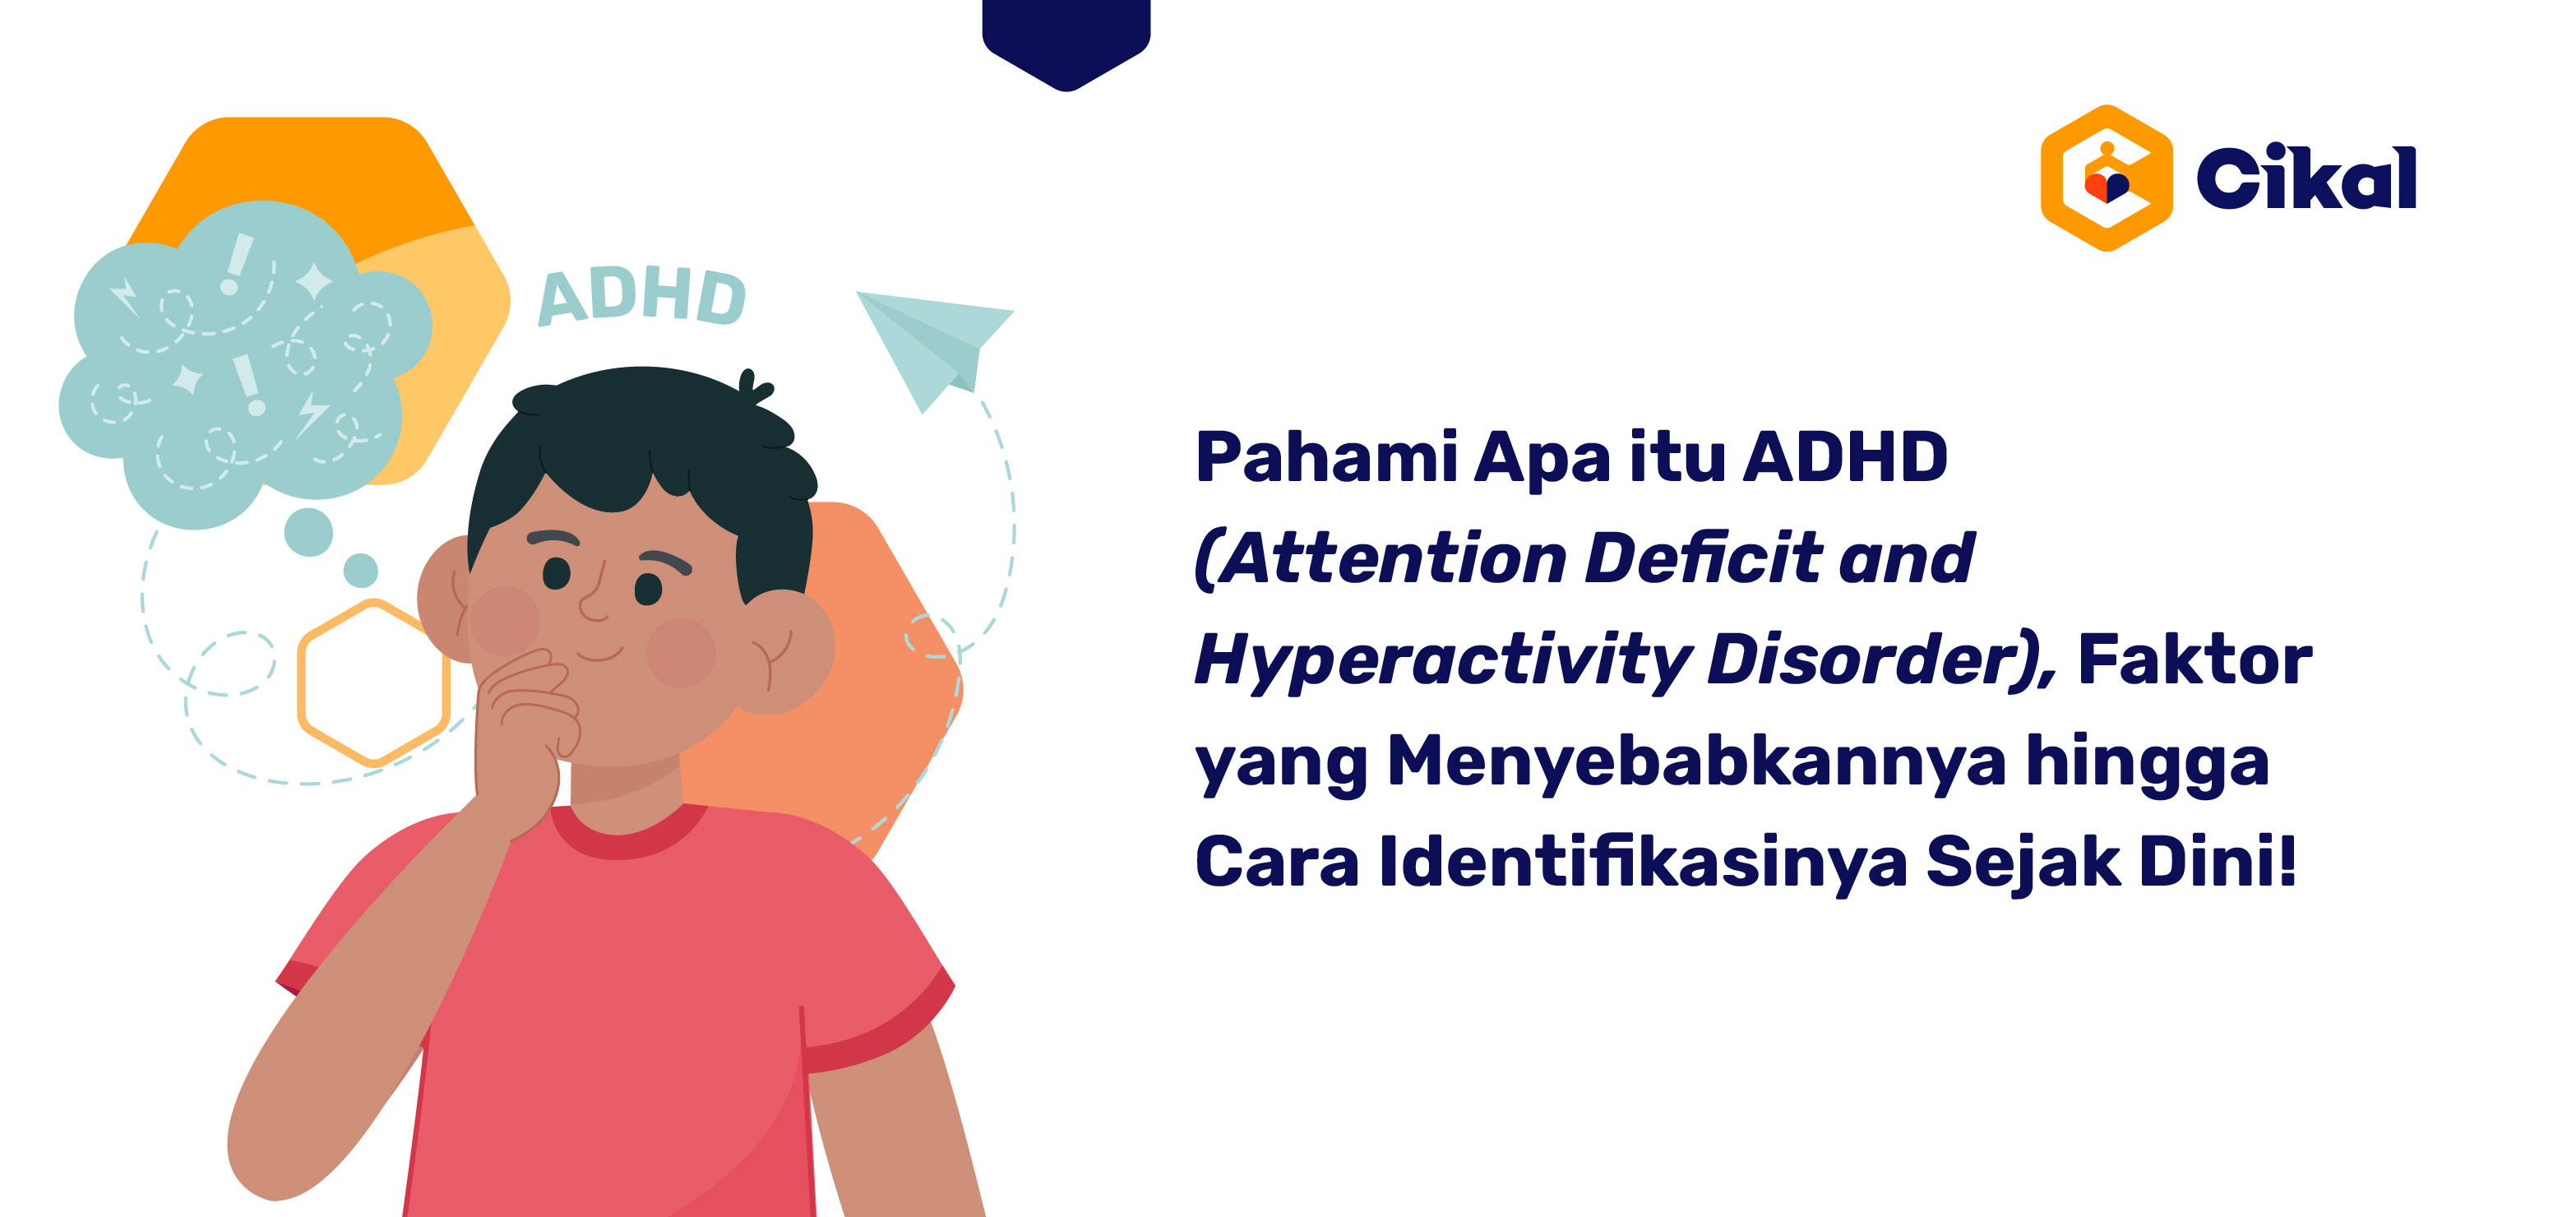 Pahami Apa itu ADHD  (Attention Deficit and Hyperactivity Disorder), Faktor yang Menyebabkannya hingga Cara Identifikasinya Sejak Dini! 